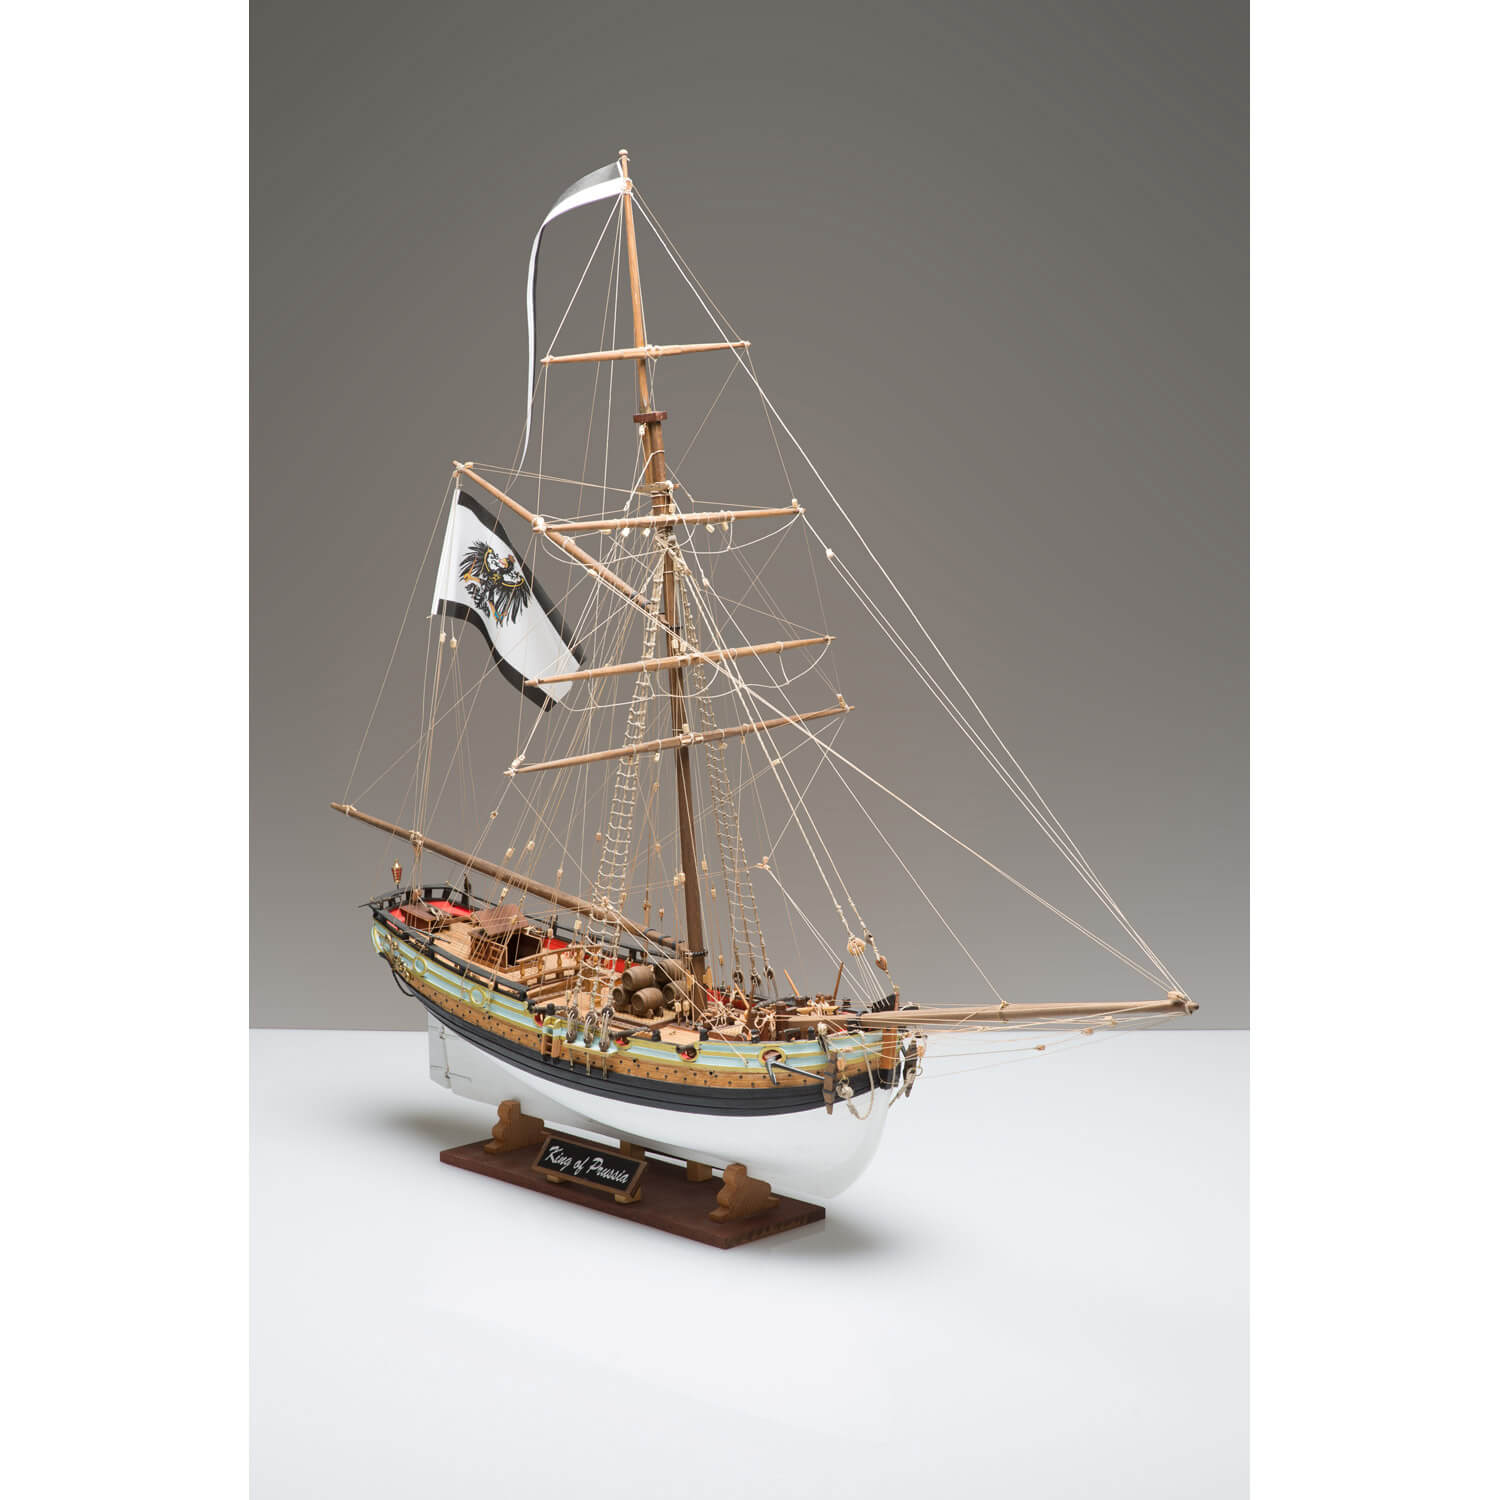 Maquette bateau en bois : King of Prussia